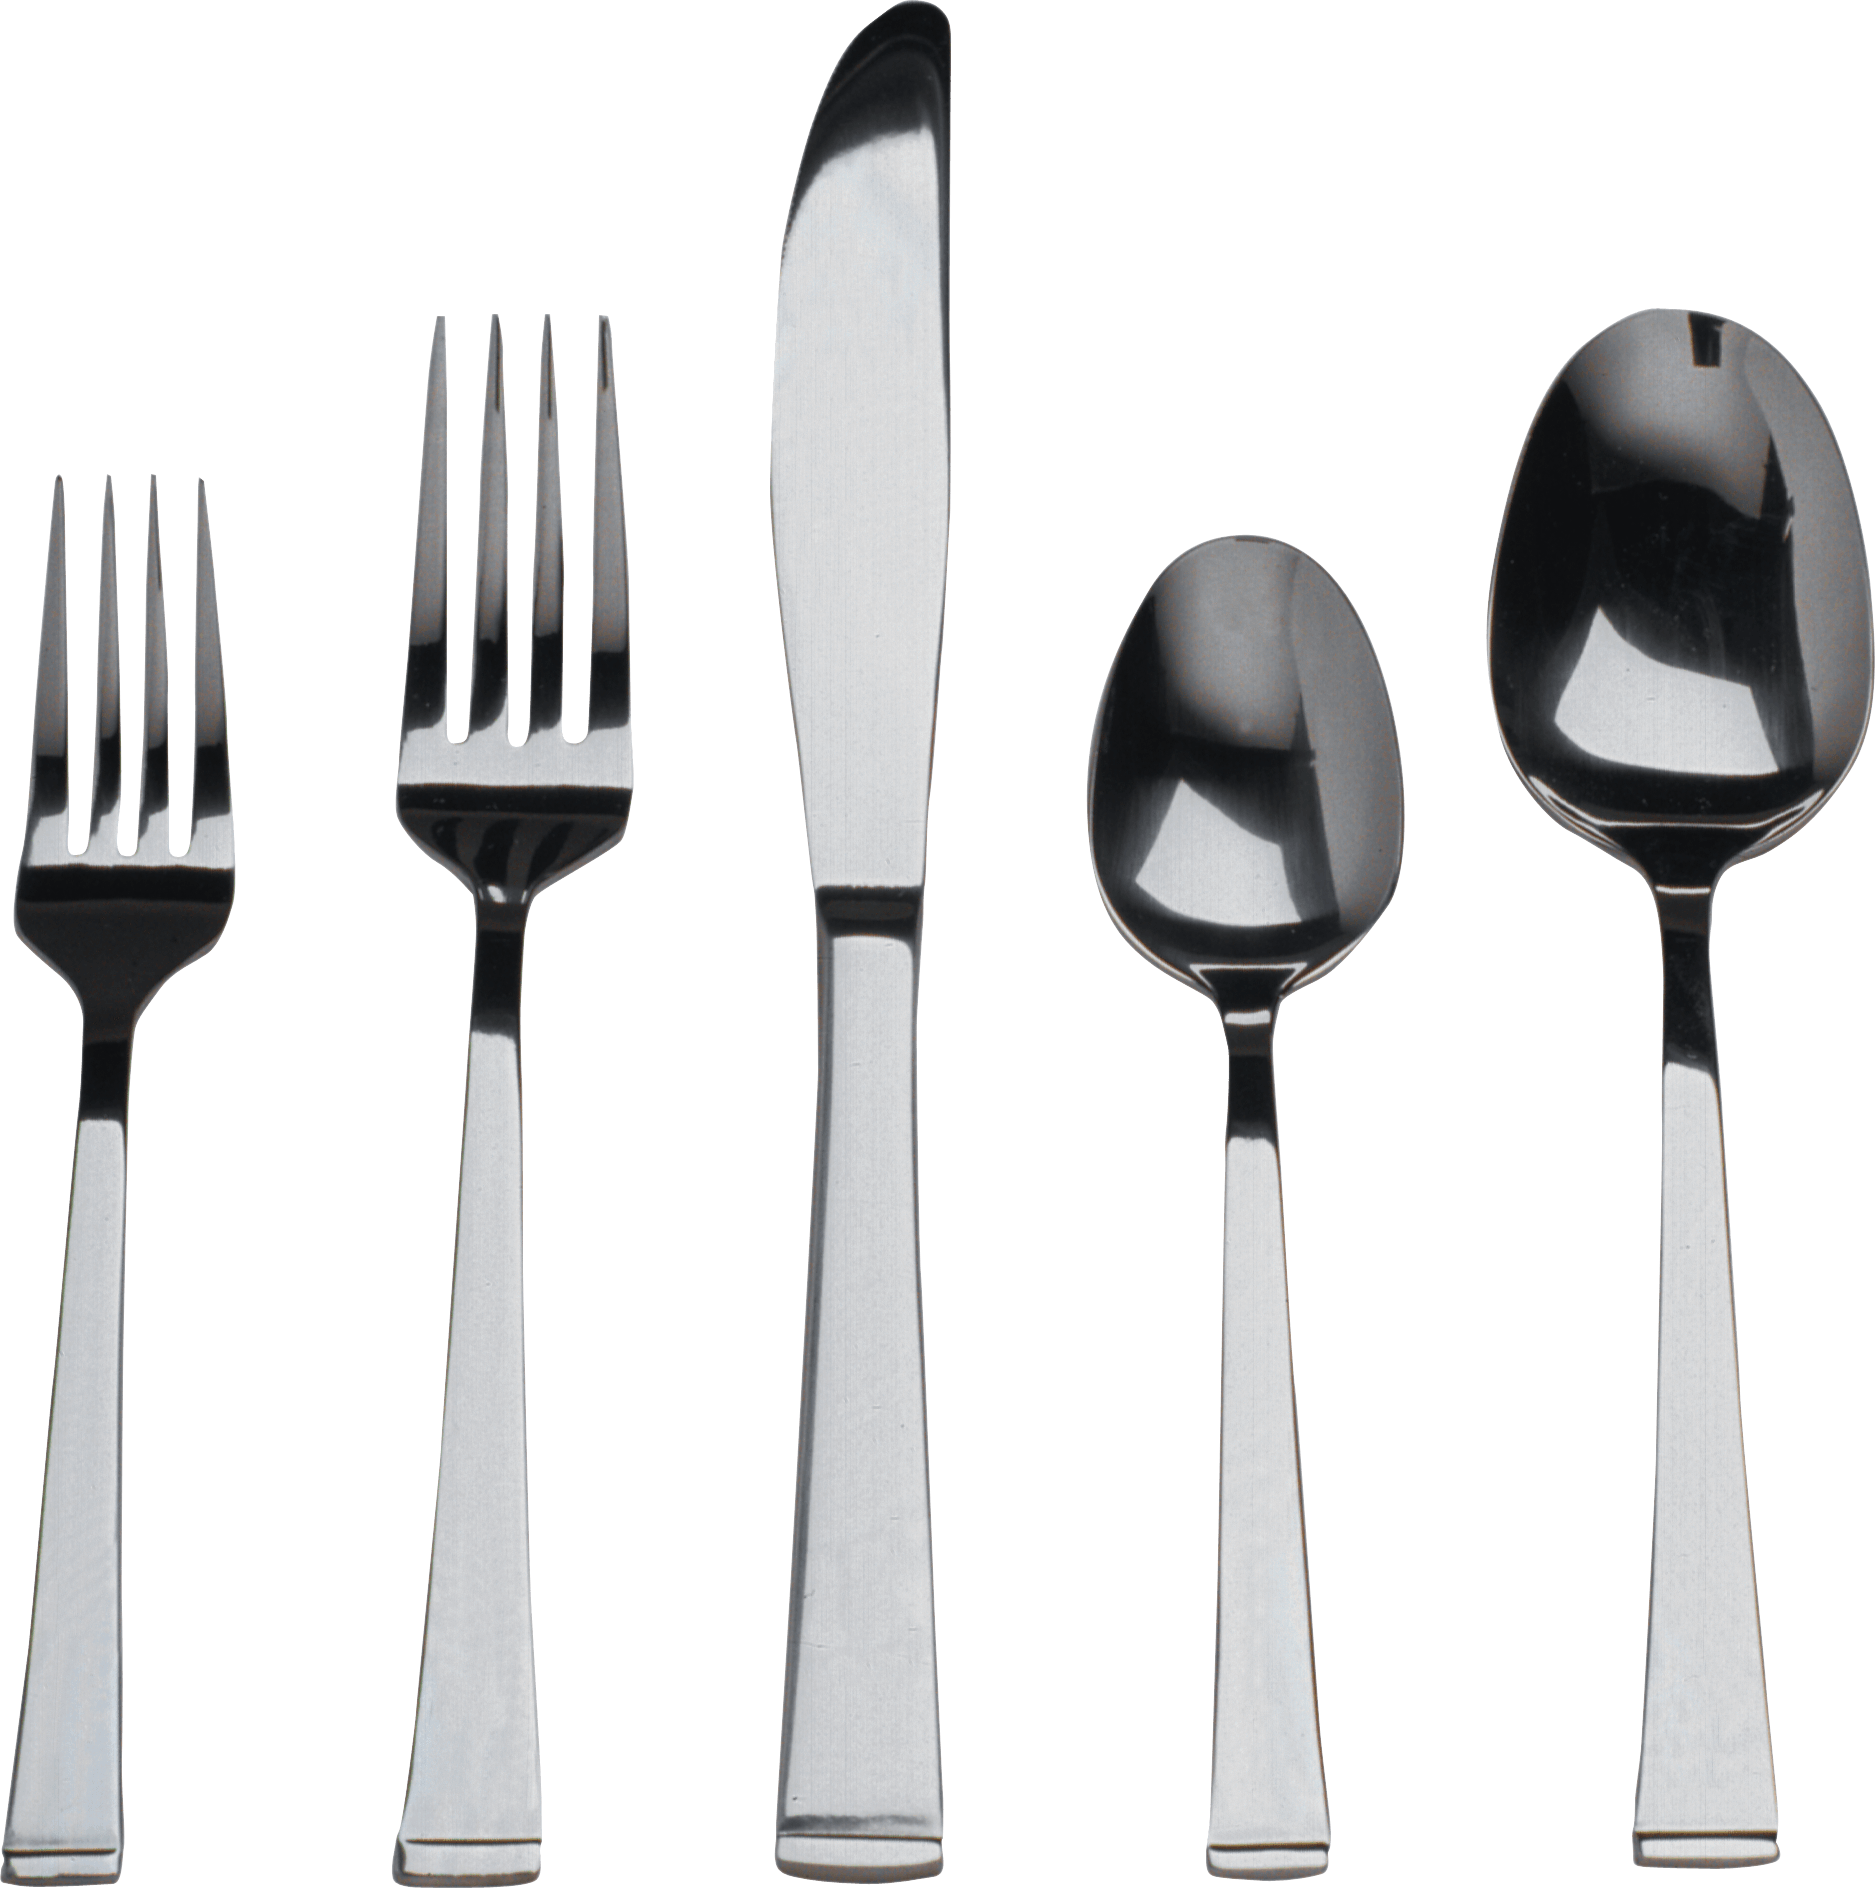 spoon, download spoons forks knives png image png image pngimg 29451